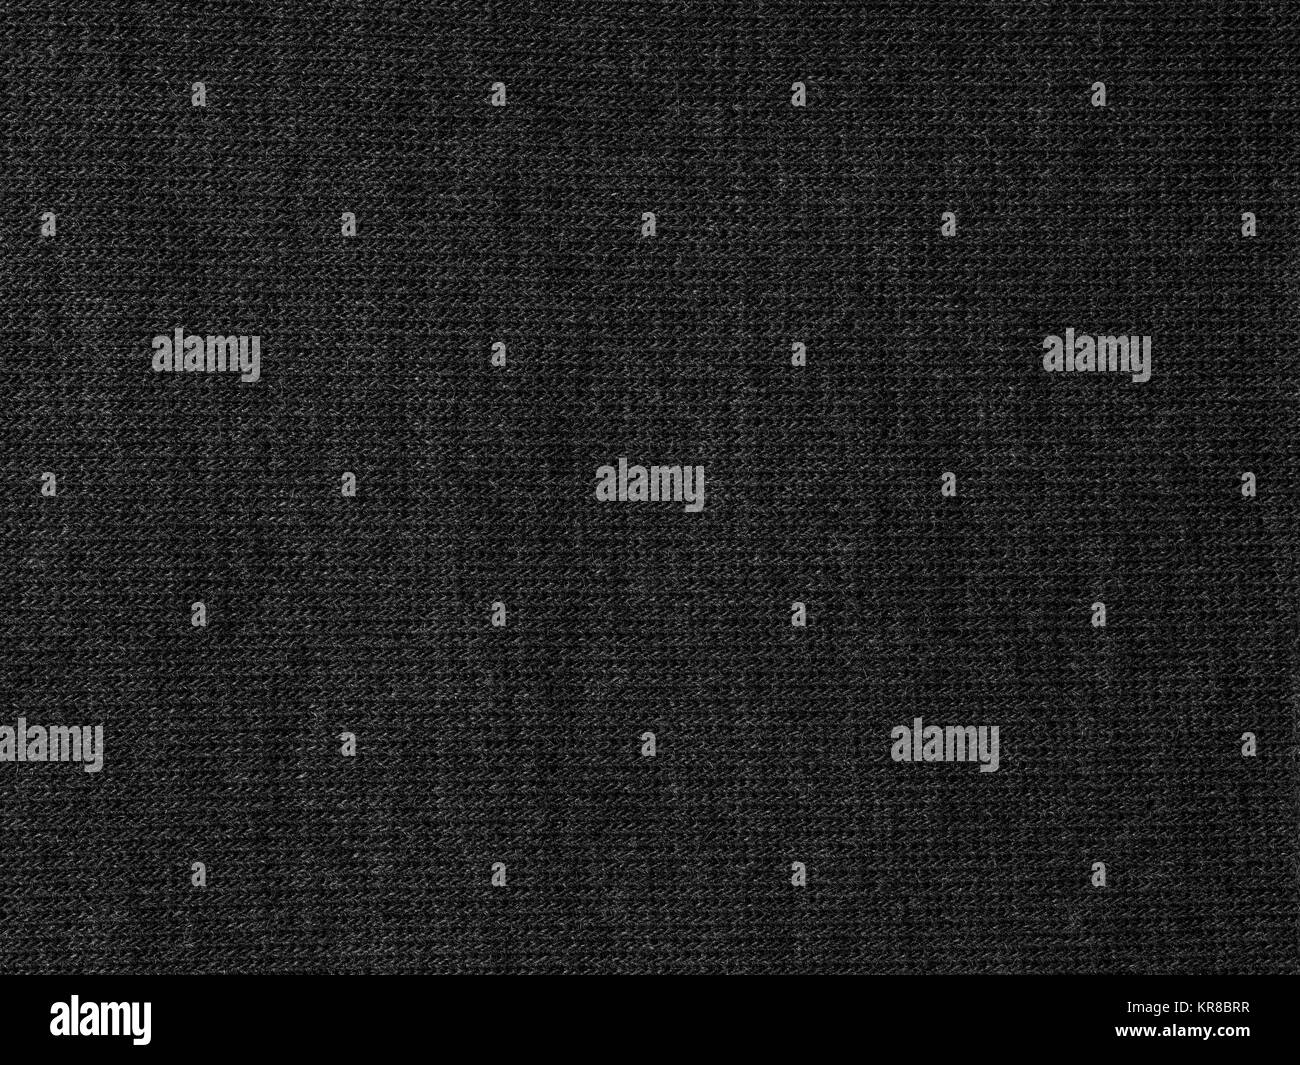 large detailed fabric texture regular background Stock Photo - Alamy